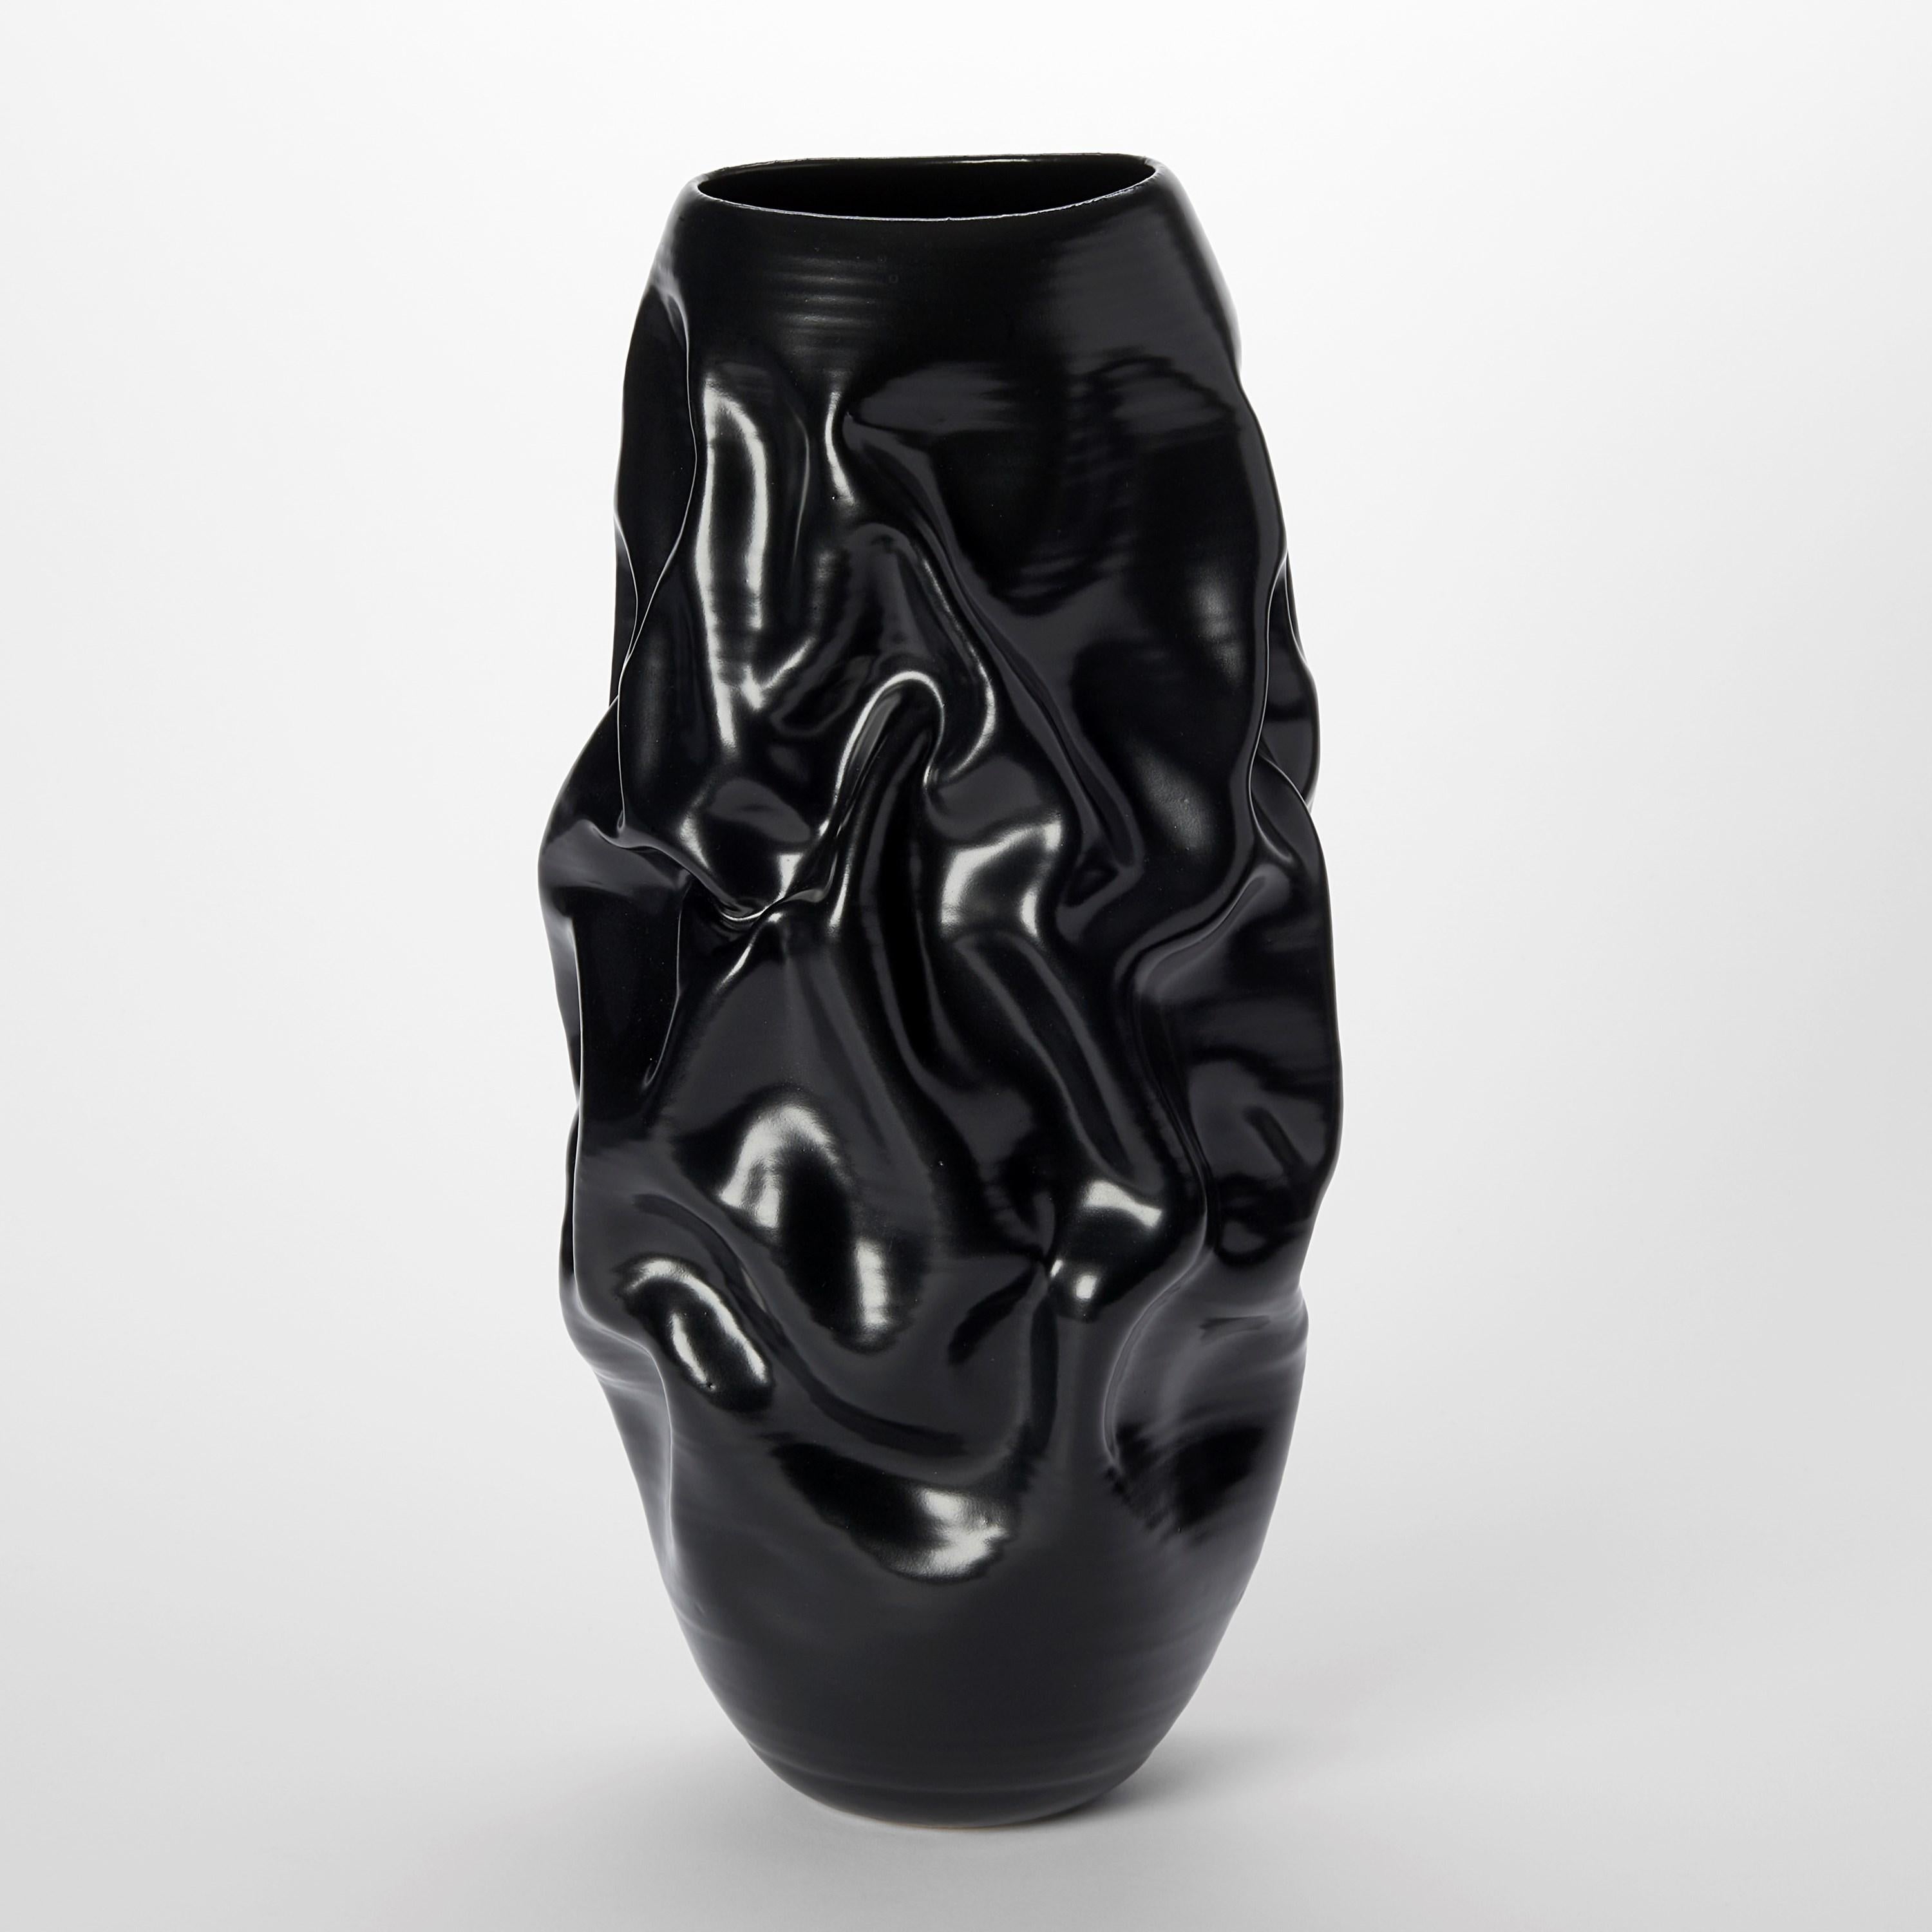 Spanish Tall Crumpled Form No 113, black ceramic sculpture by Nicholas Arroyave-Portela For Sale